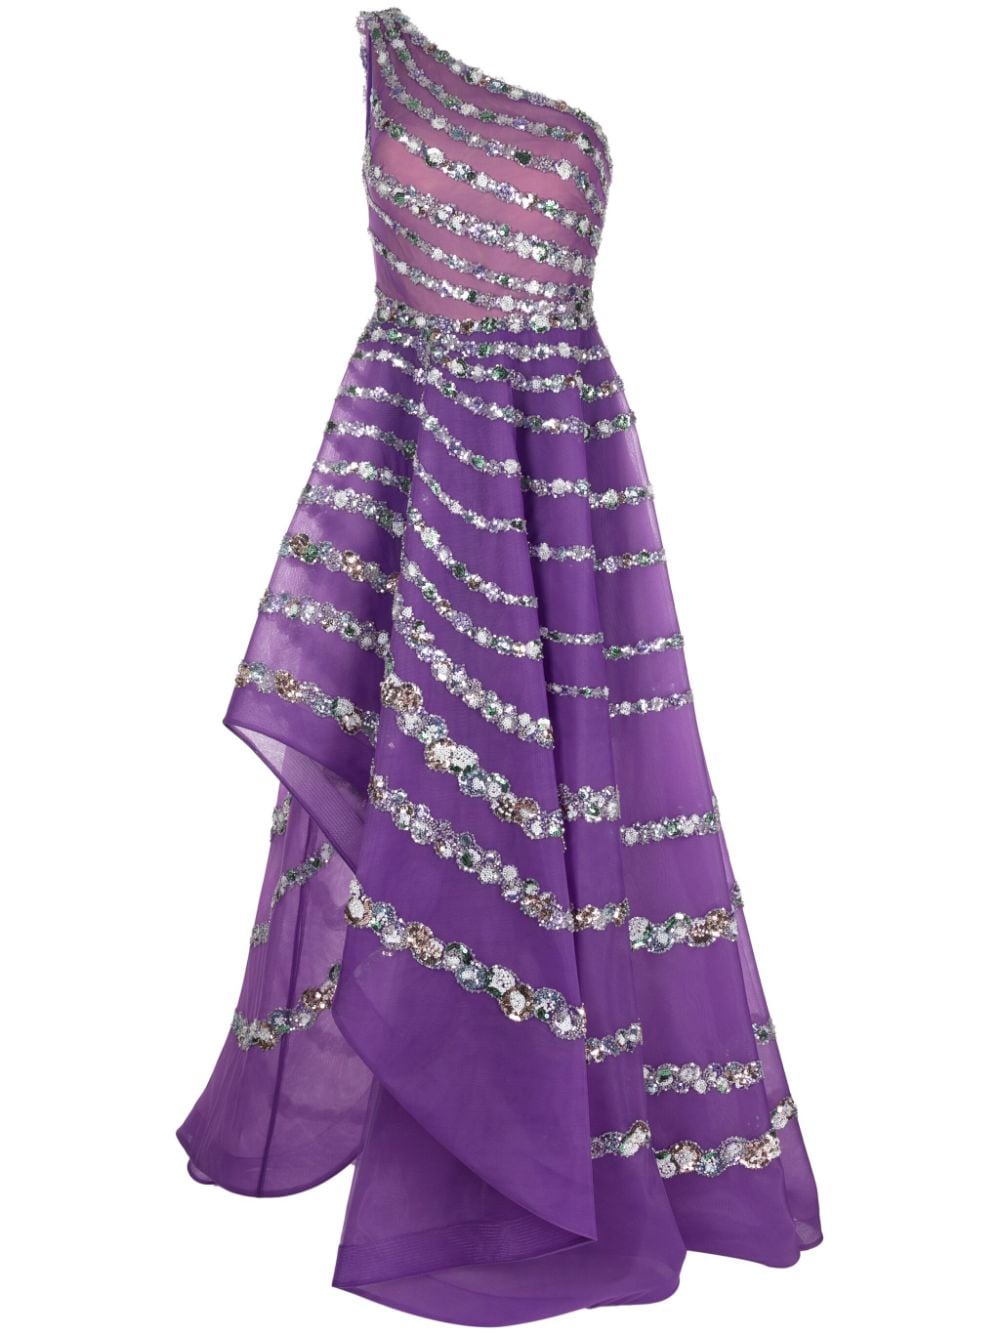 Saiid Kobeisy One-shoulder Beaded Tulle Dress In Purple